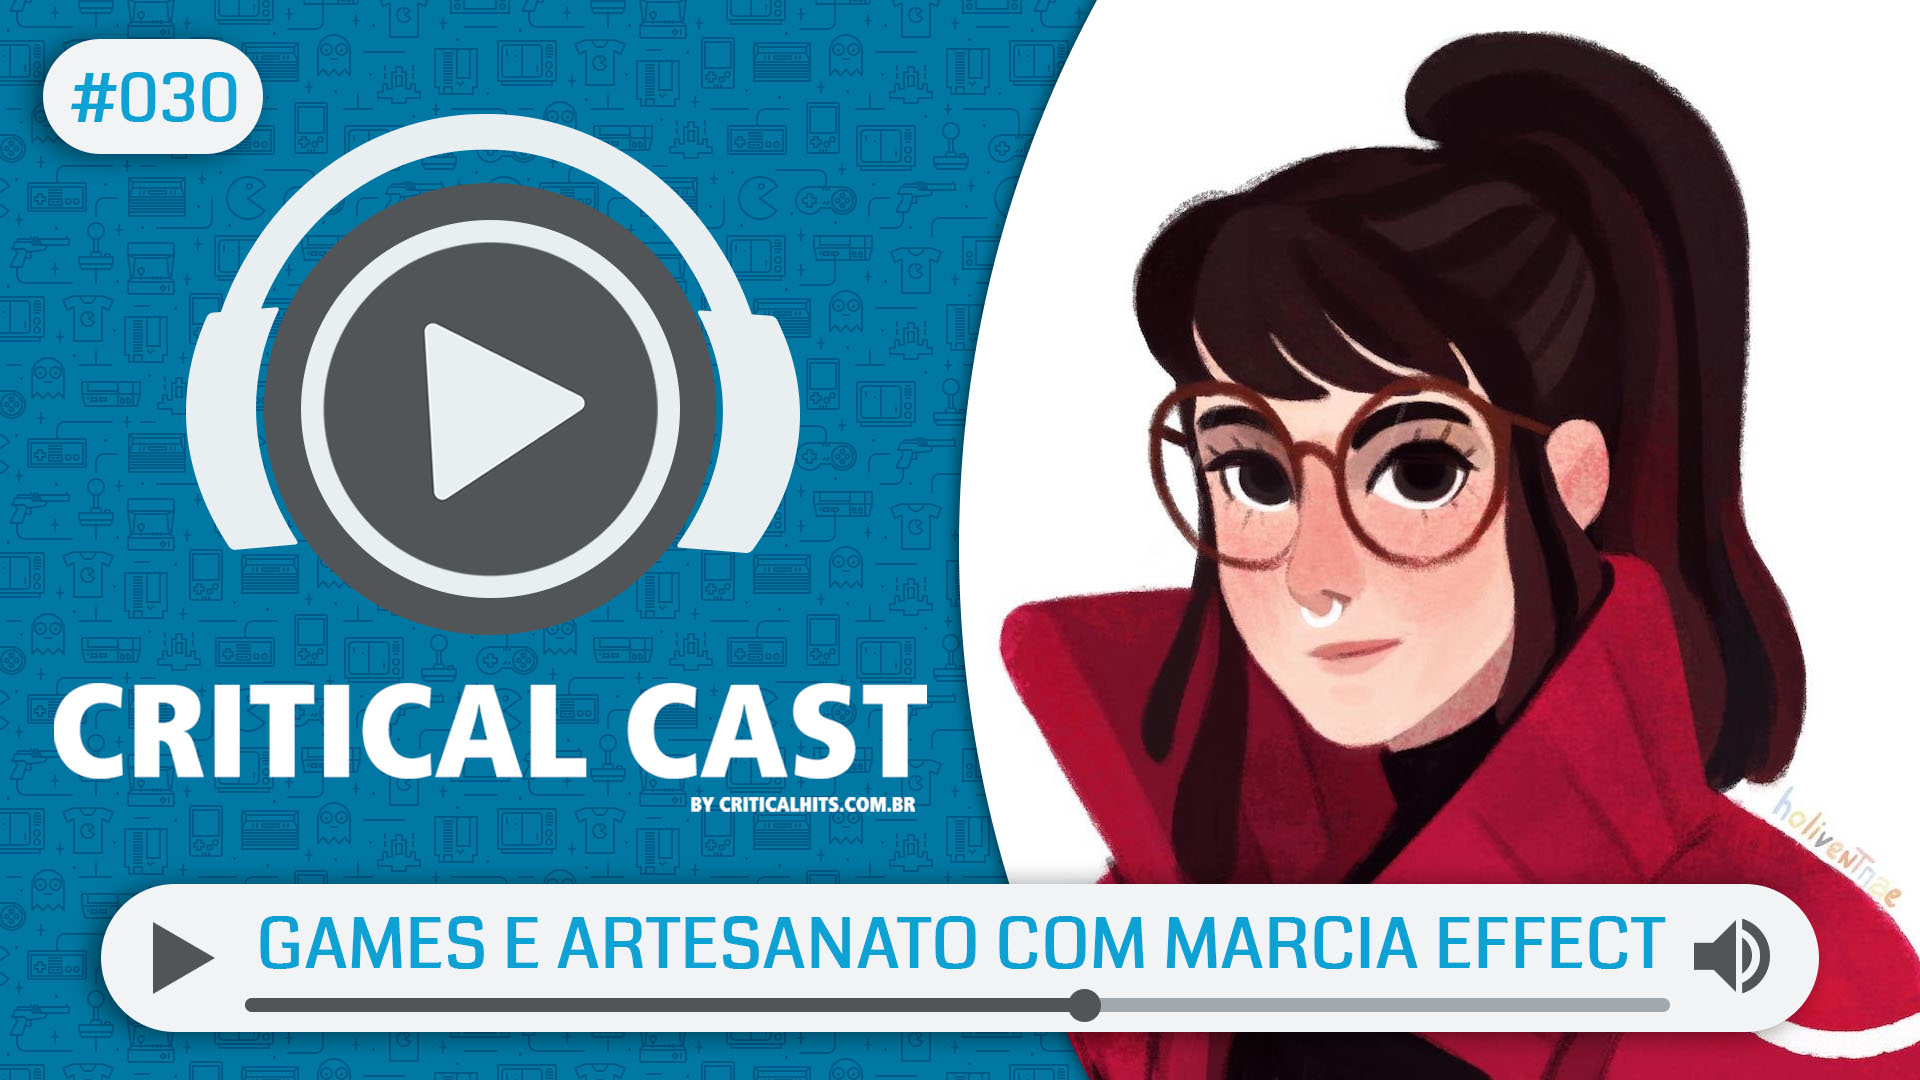 Critical Cast #30 - Games e Artesanato com Marcia Effect